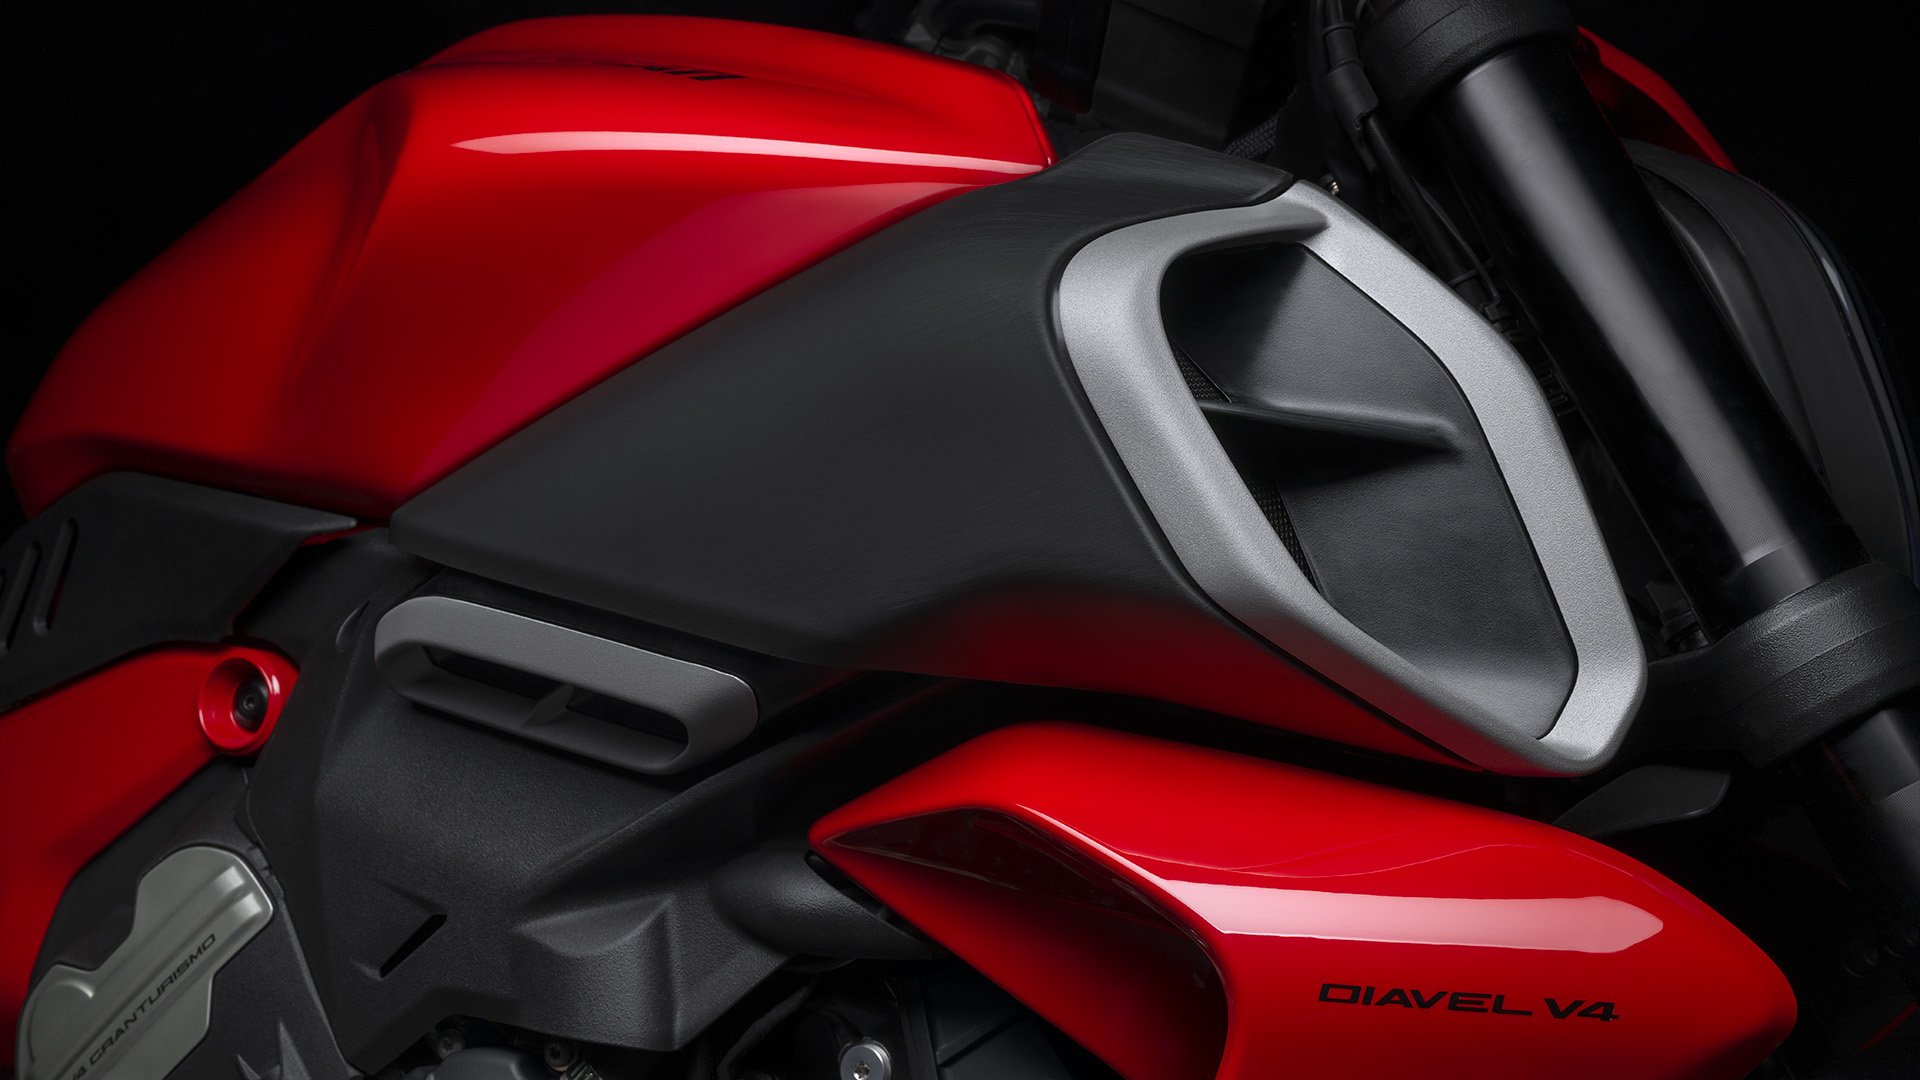 Ducati-Diavel-V4-MY23-overview-gallery-1920x1080-03.jpg